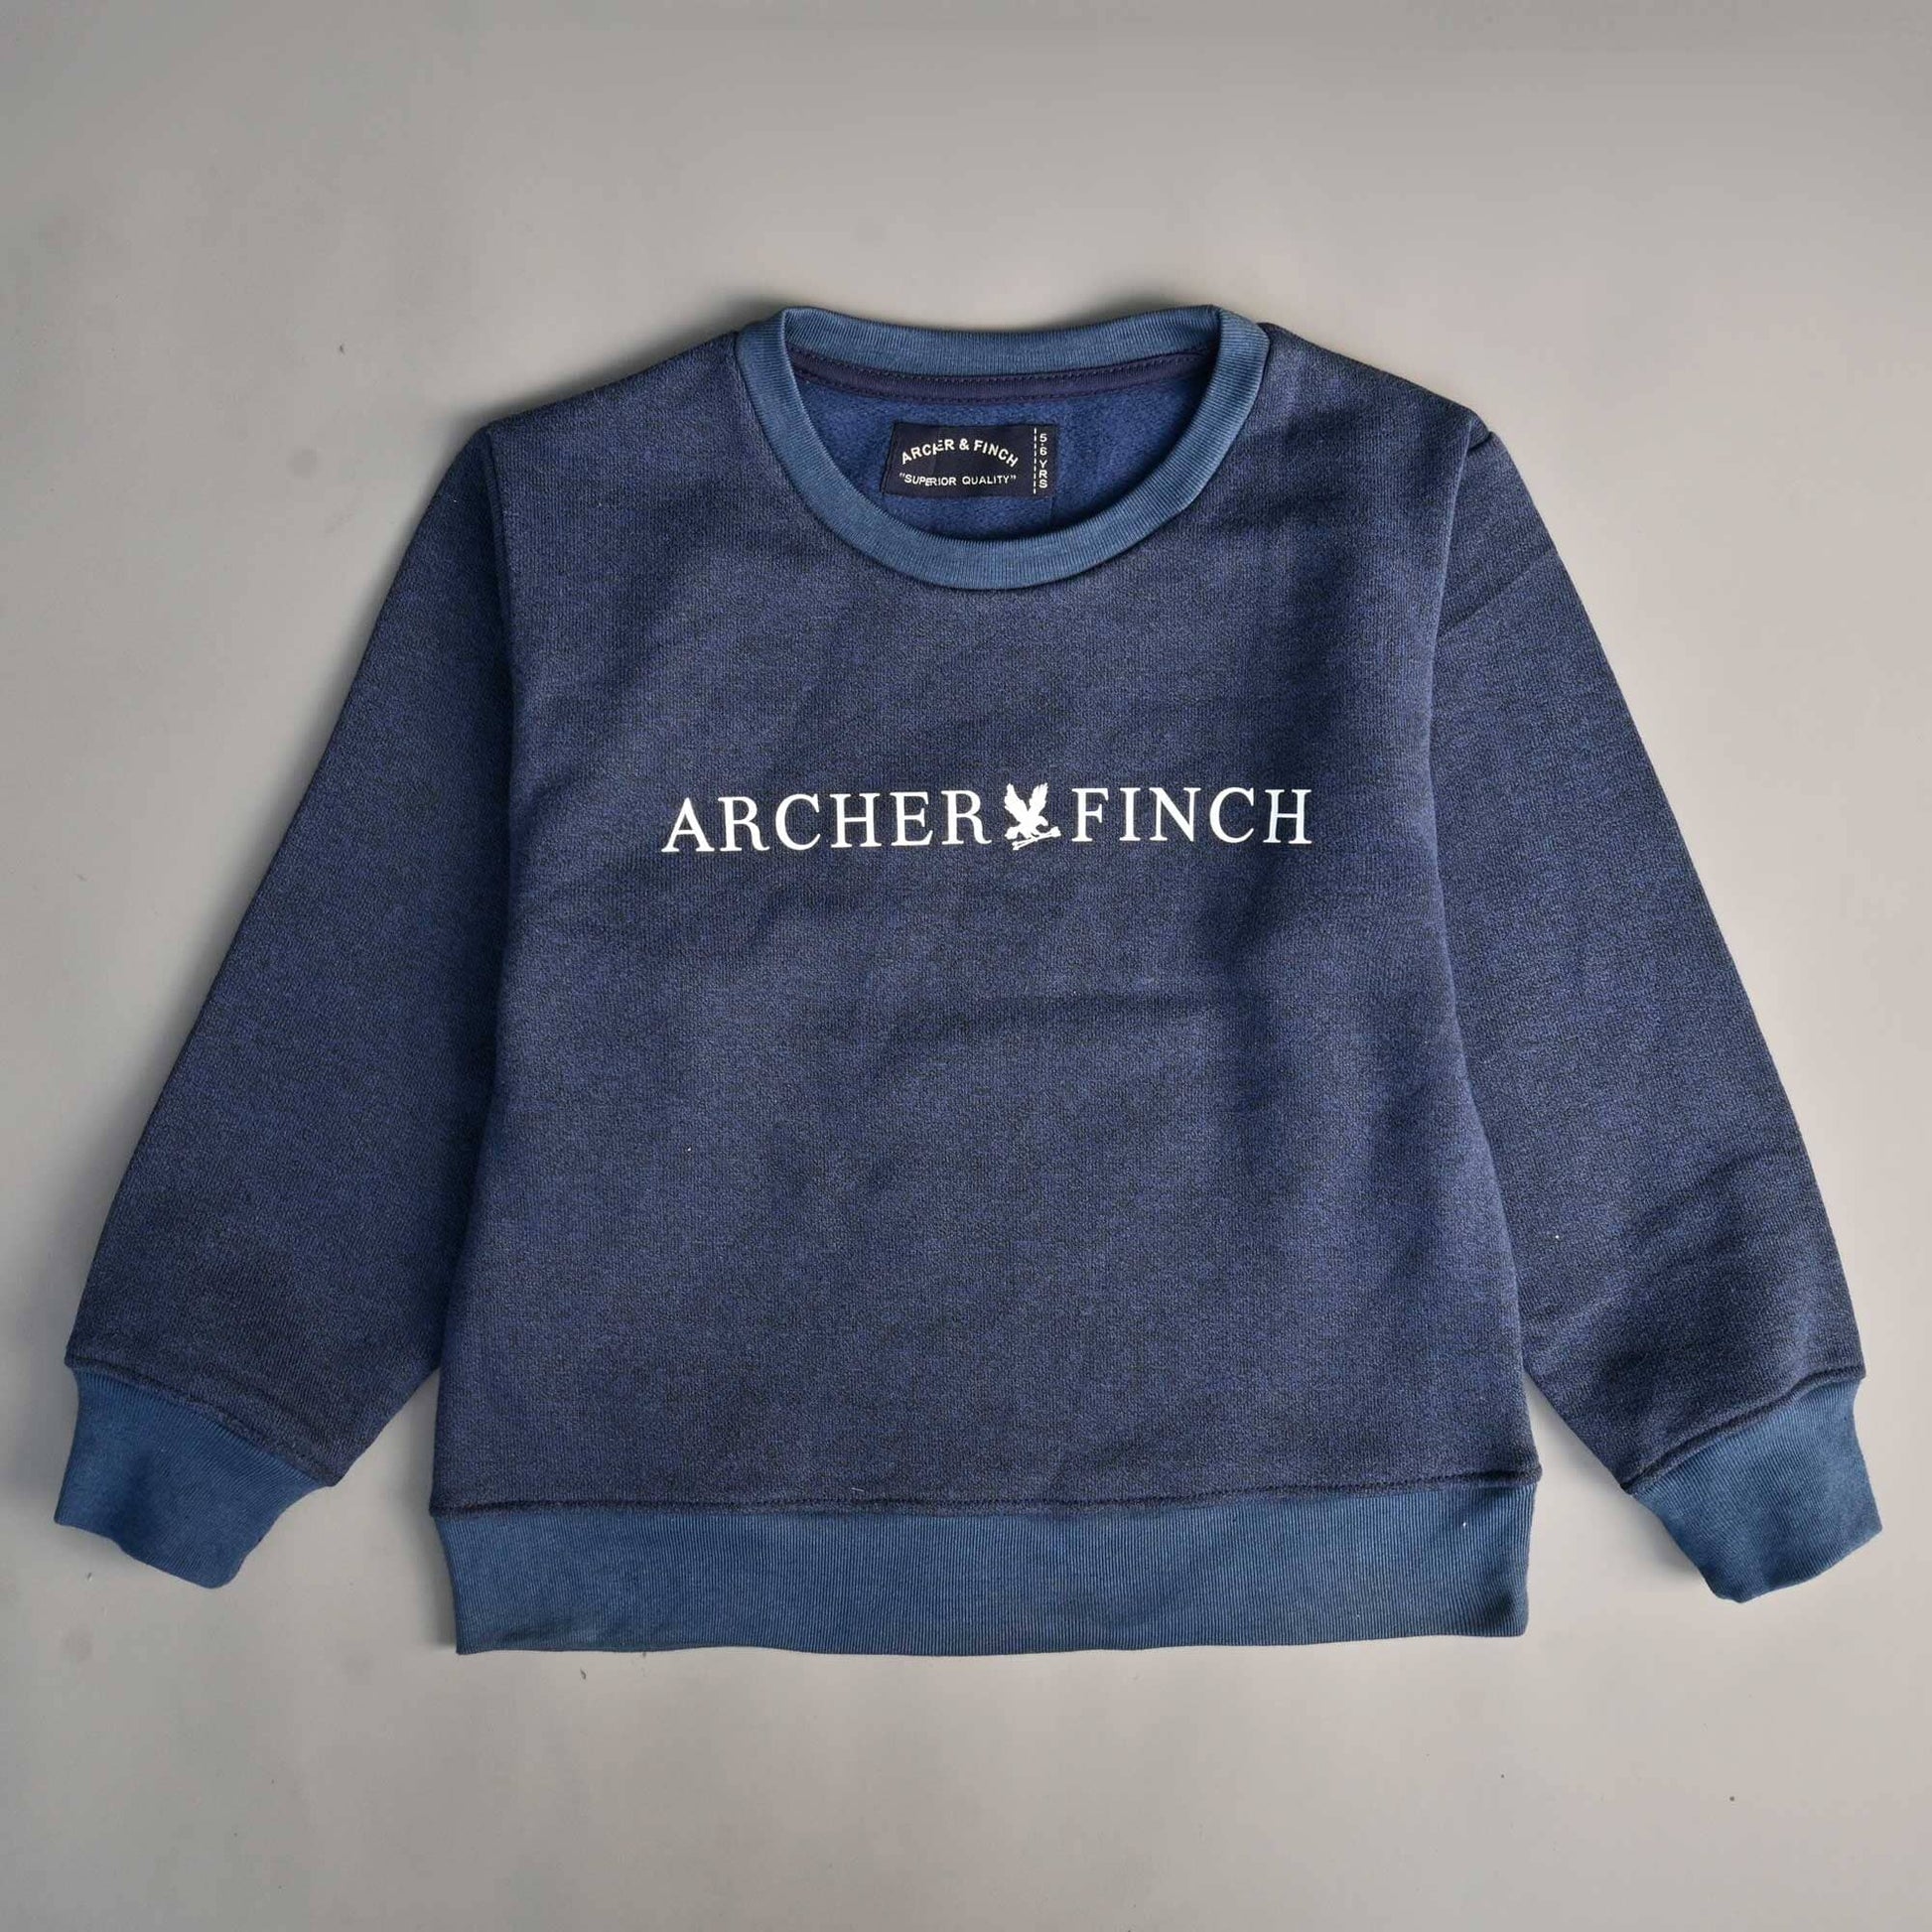 A&F Boy's Archer & Finch Printed Fleece Sweat Shirt Boy's Sweat Shirt LFS Navy Marl 3-4 Years 